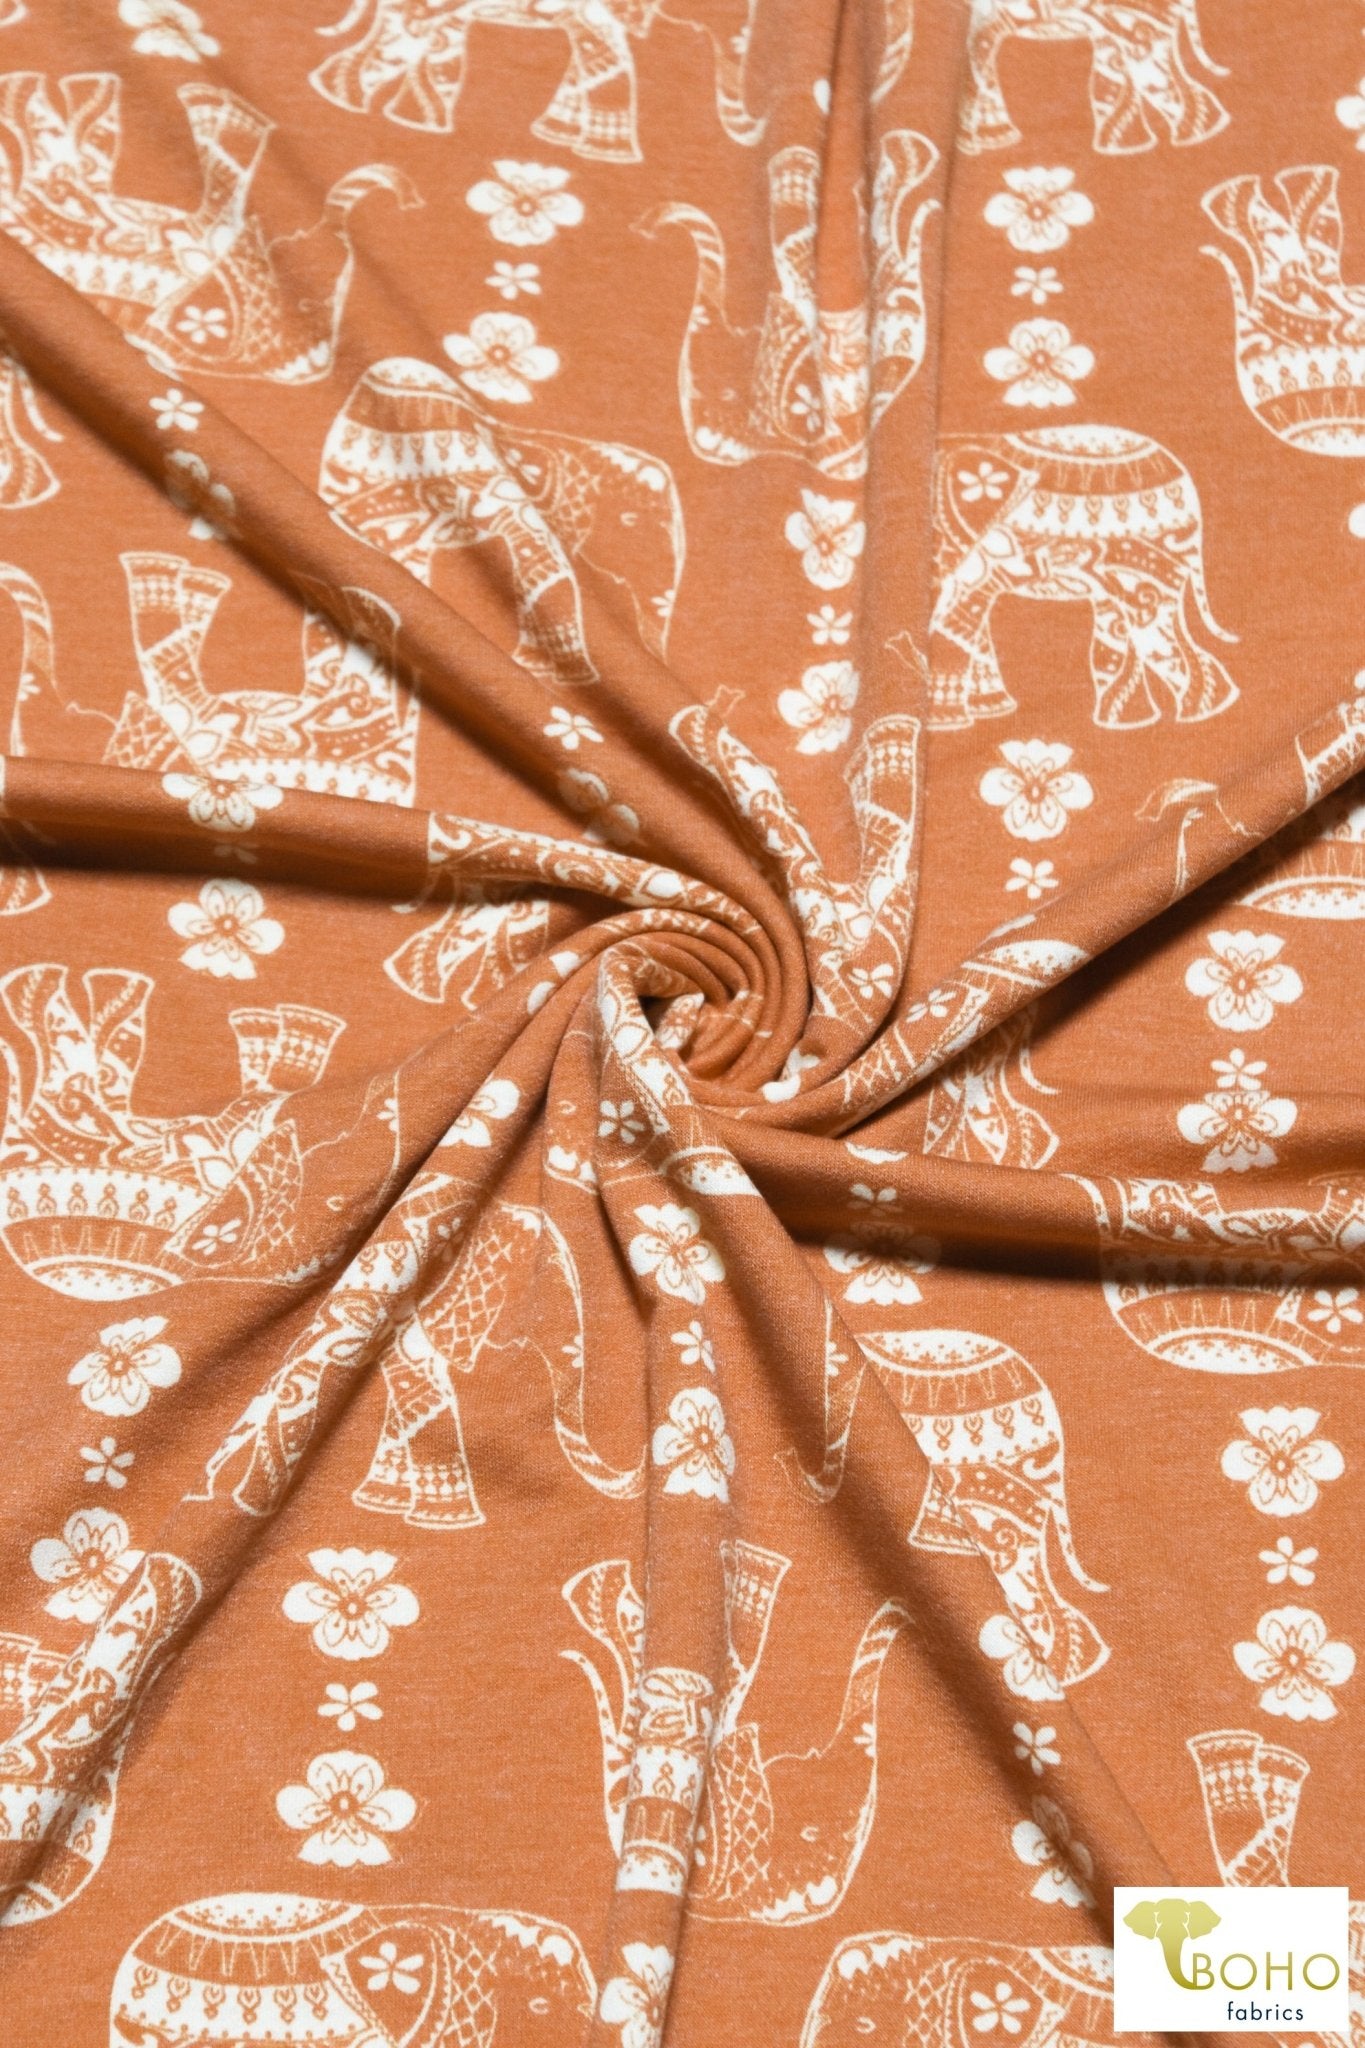 Elephant Parade on Desert Sun Orange French Terry Knit Print. FTP-326-ORG - Boho Fabrics